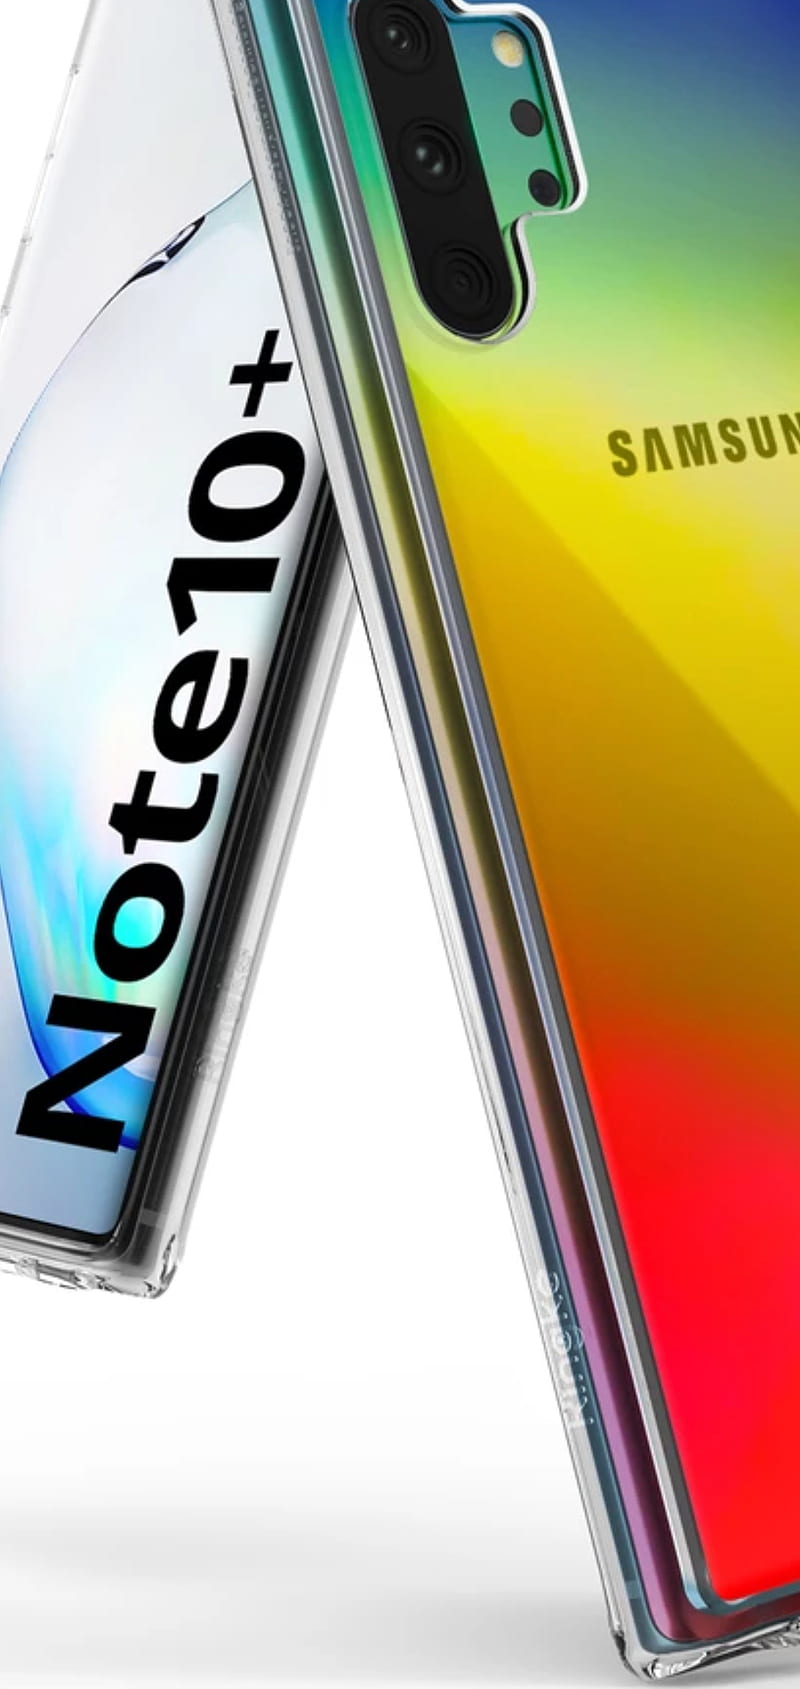 Samsung Galaxy Note 10 Plus Wallpaper | Samsung galaxy wallpaper, Samsung  galaxy wallpaper android, Galaxy note 10